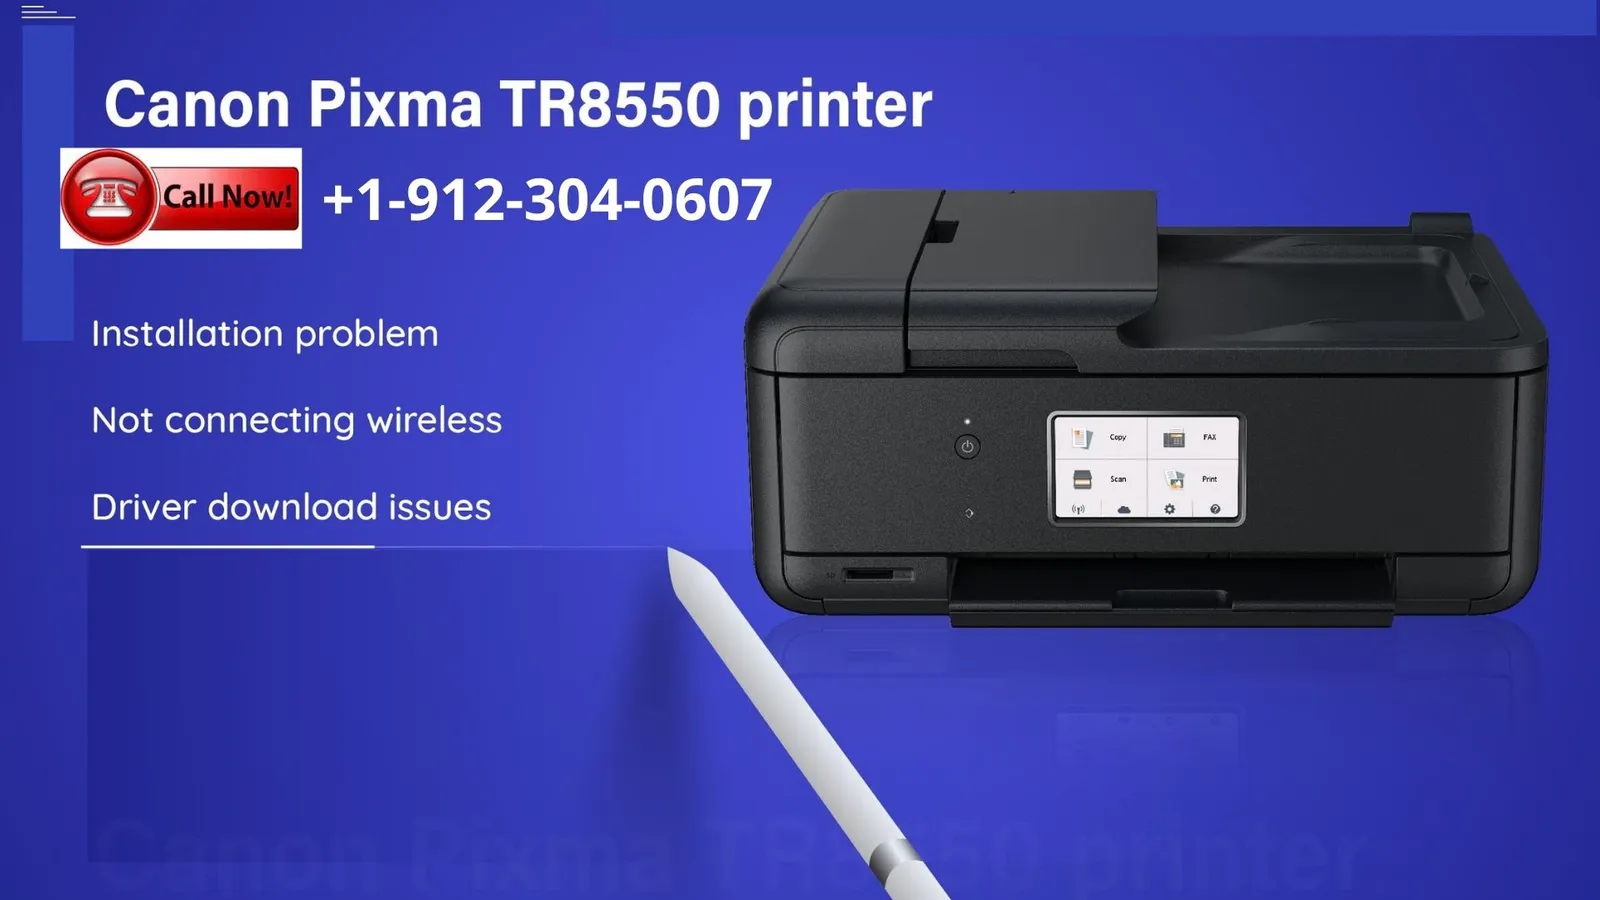 Canon Pixma TR8550 printer driver Contact @ 912-304-0607